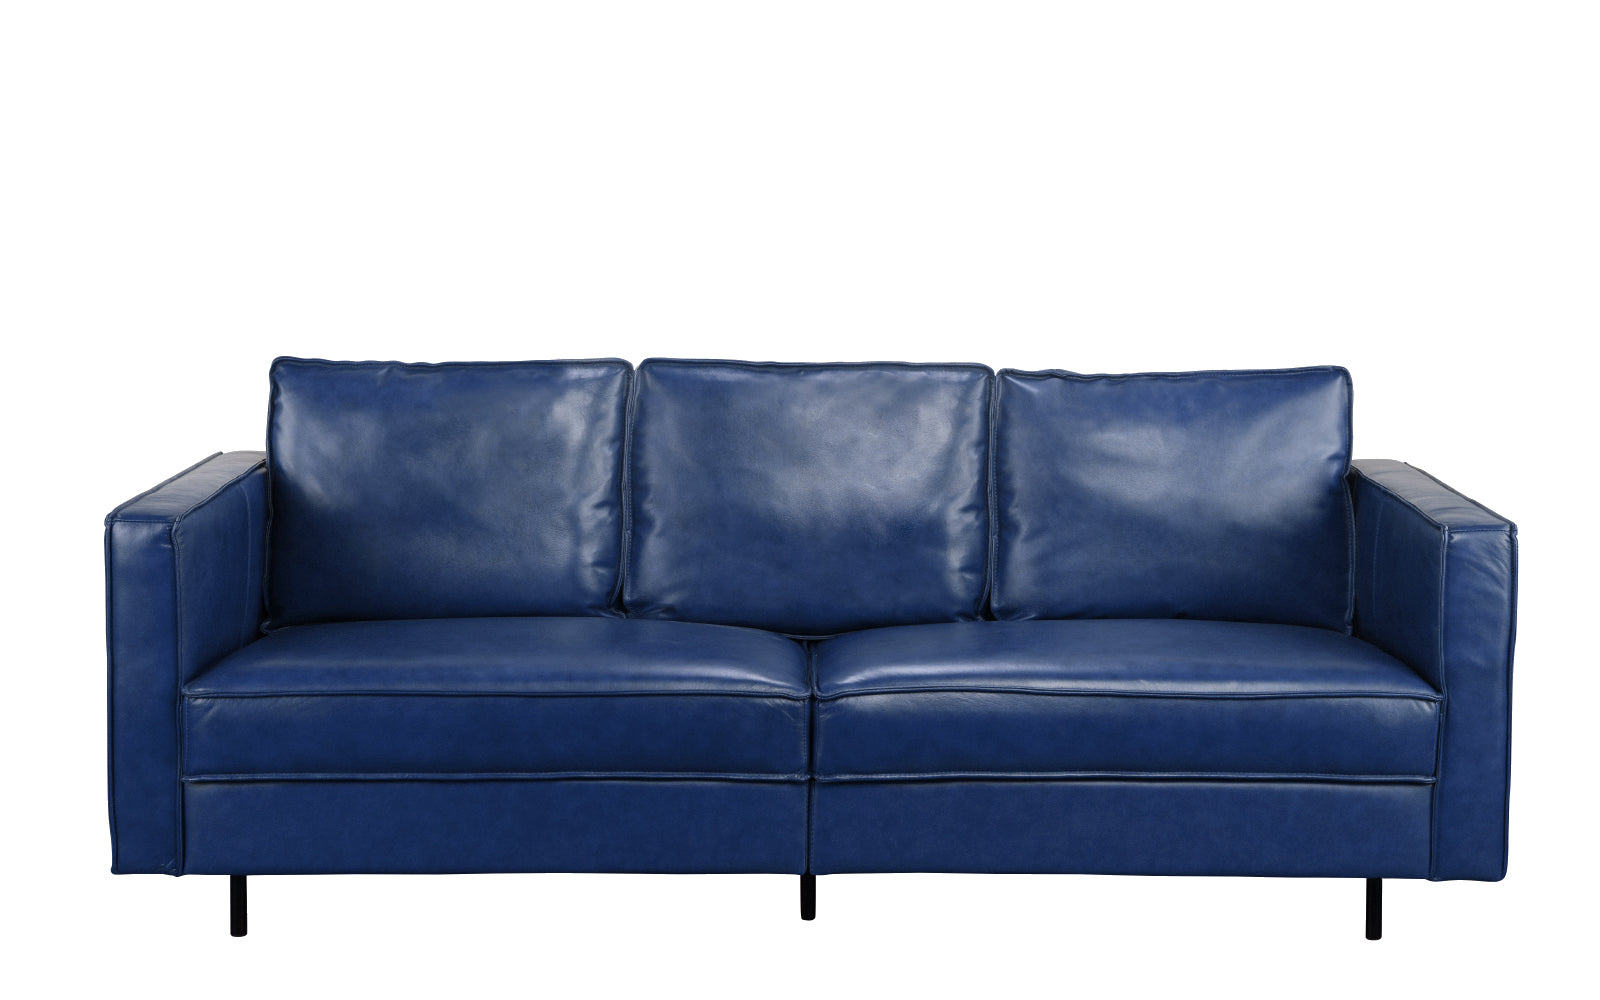 Bonte California Original Mid Century Modern Leather Match Sofa